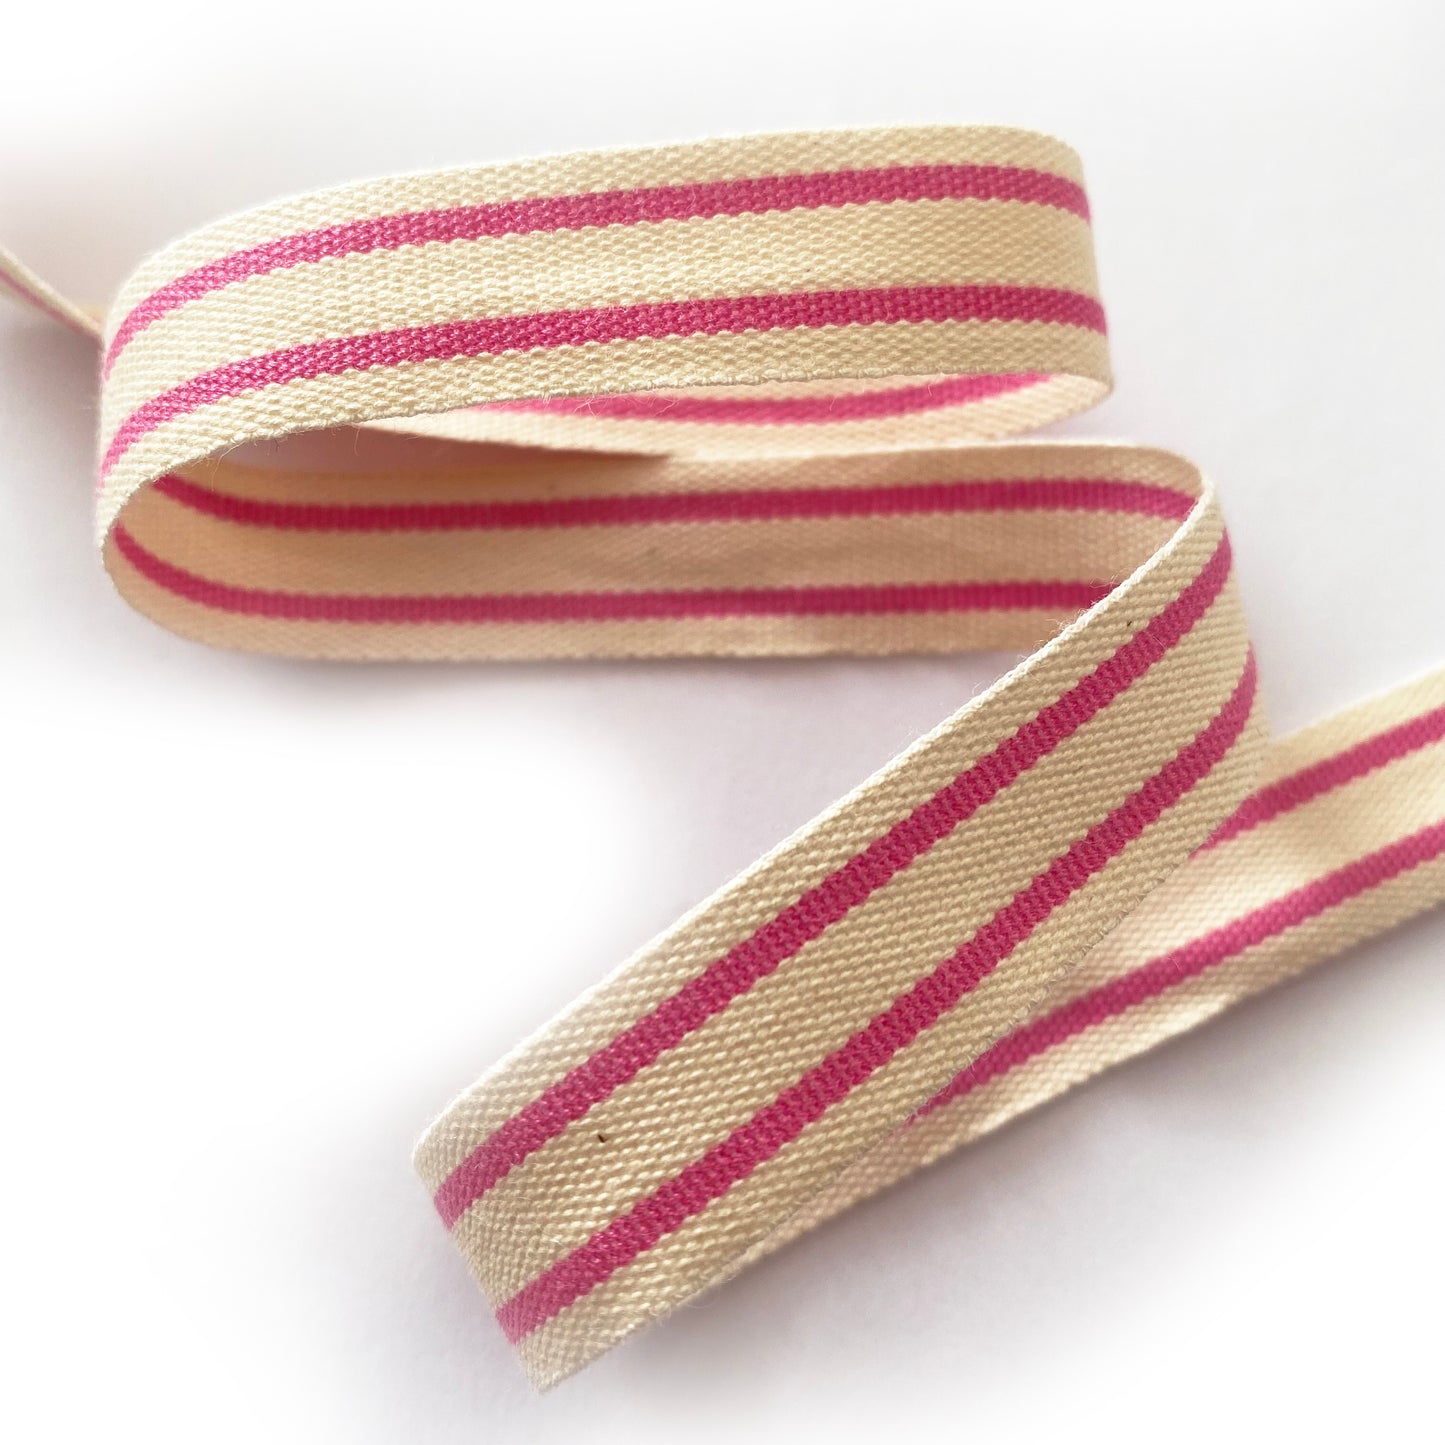 Pink & Cream Ribbon | Stripe Rustic Vintage Ticking Woven Cotton | 15mm 1.5cm - SweetpeaStore